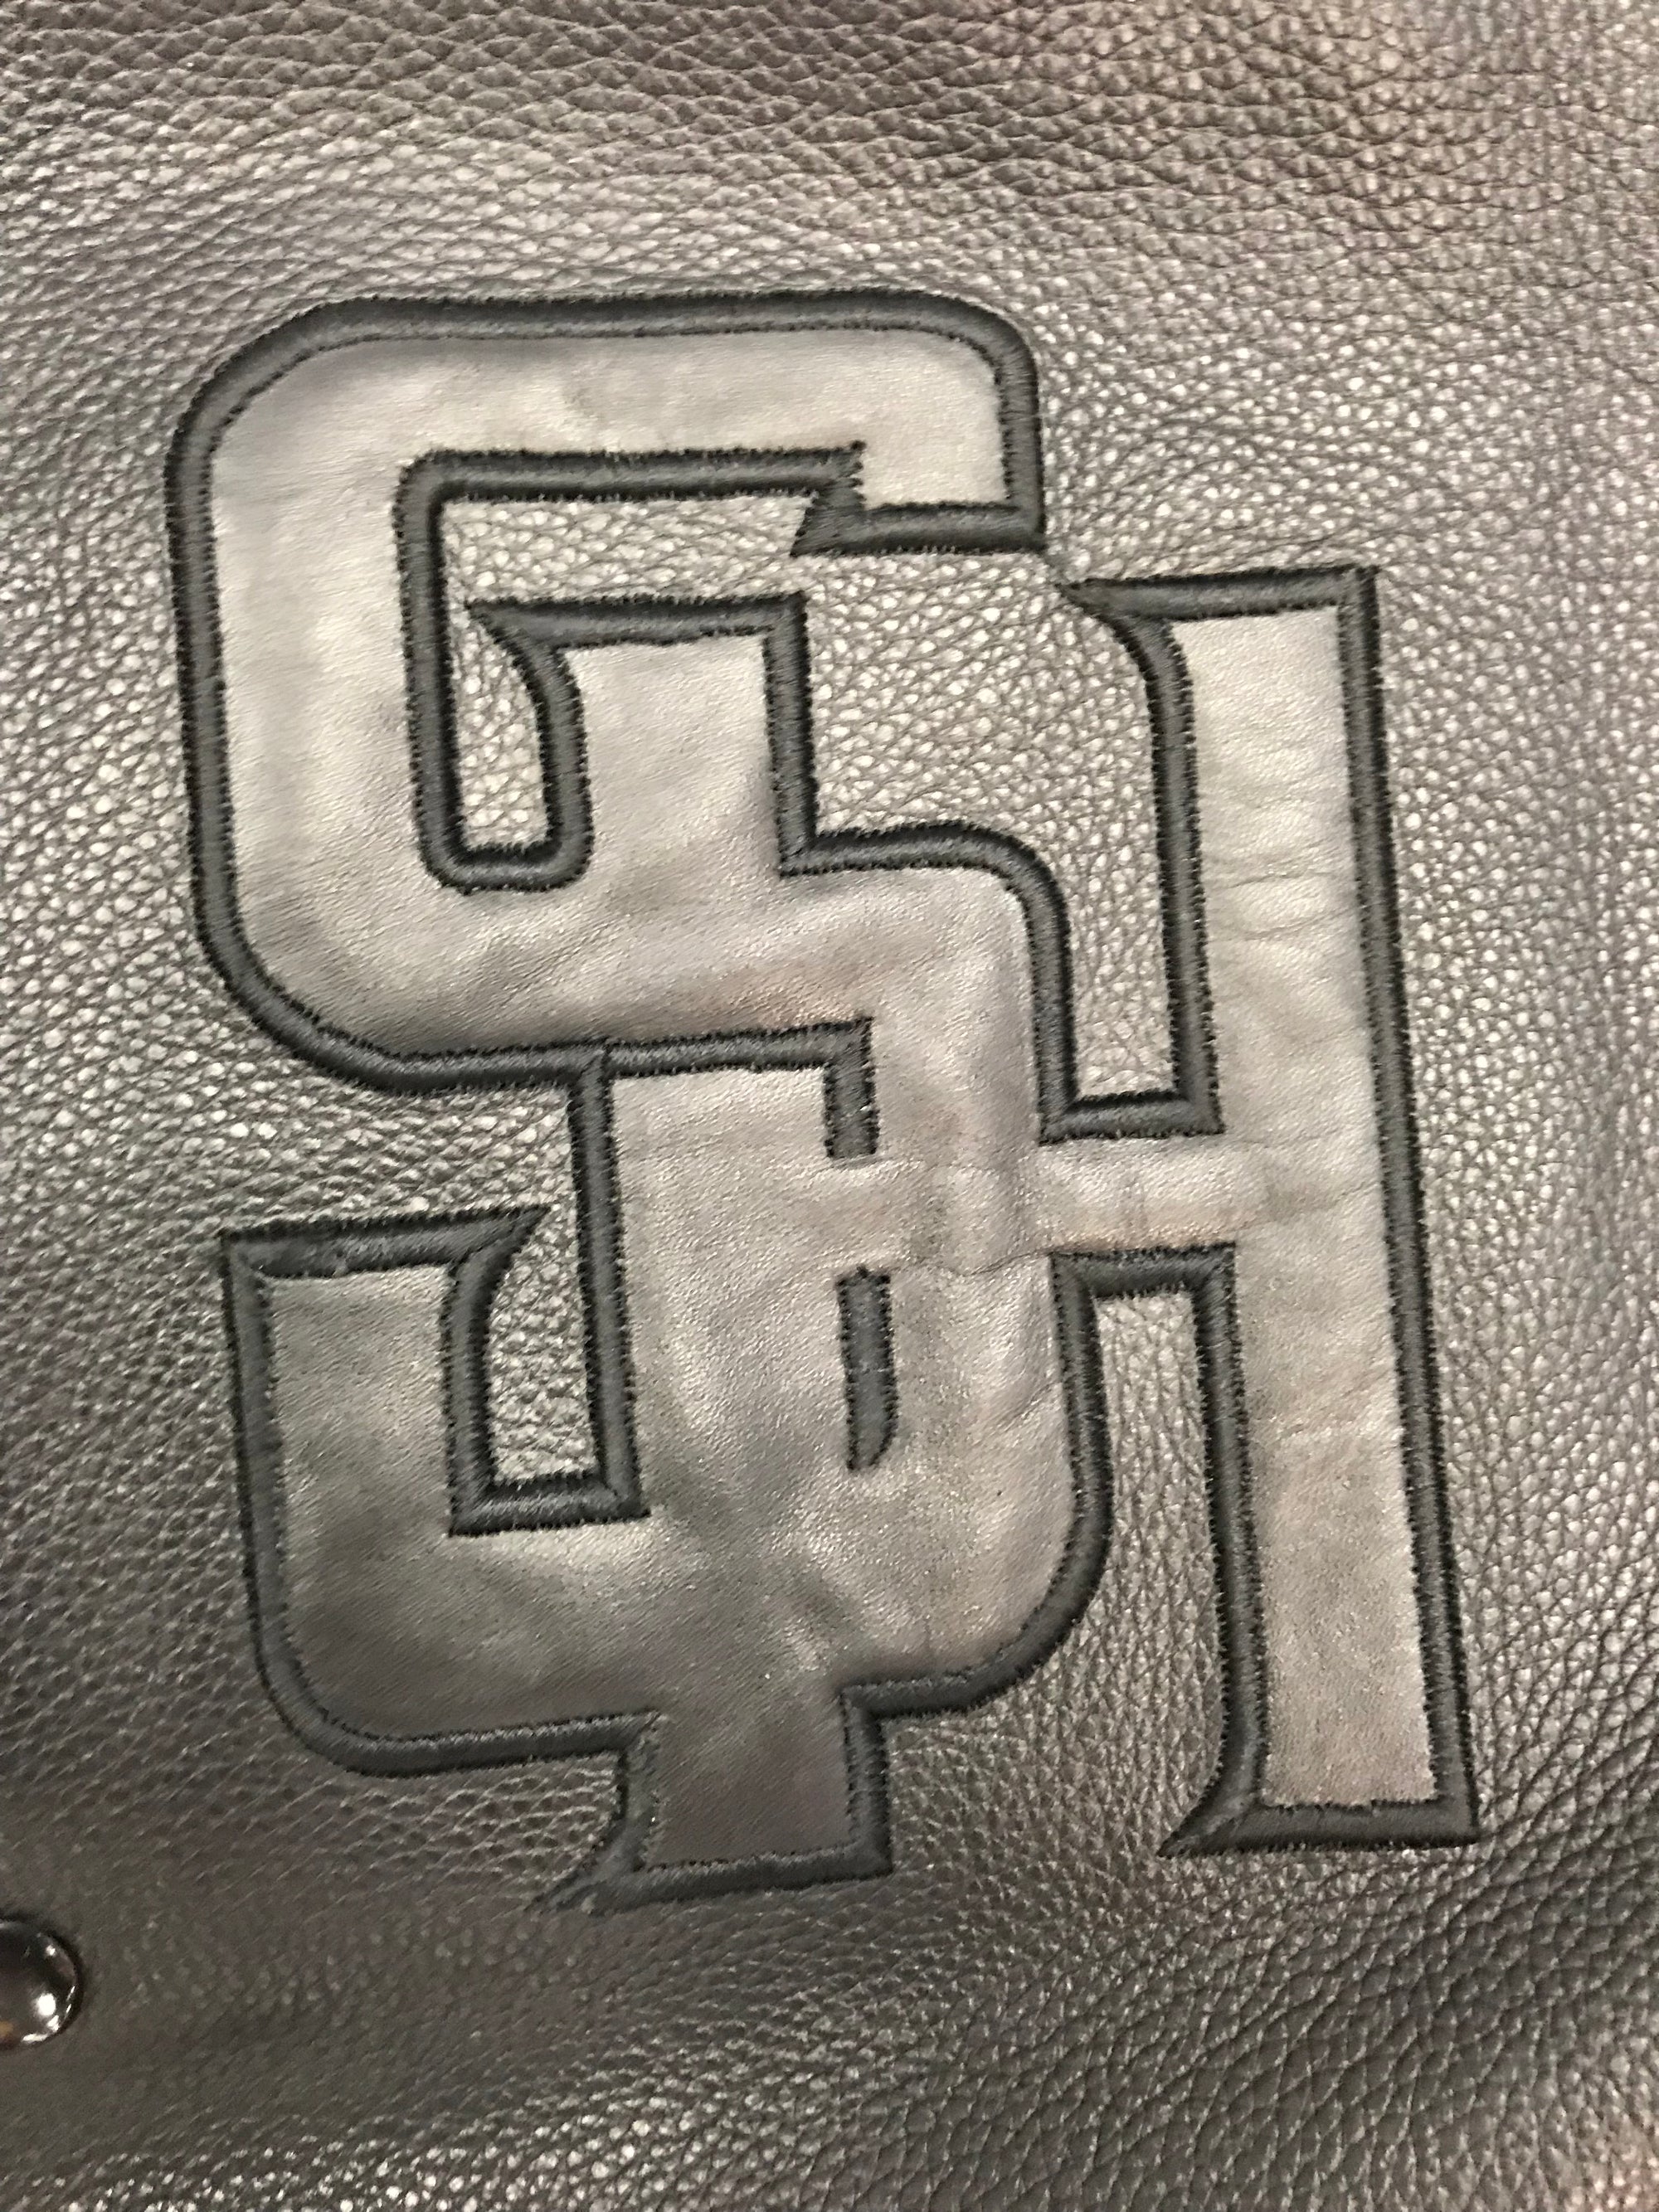 SNKR HEAD Cut & Sew All Leather Baseball Jacket